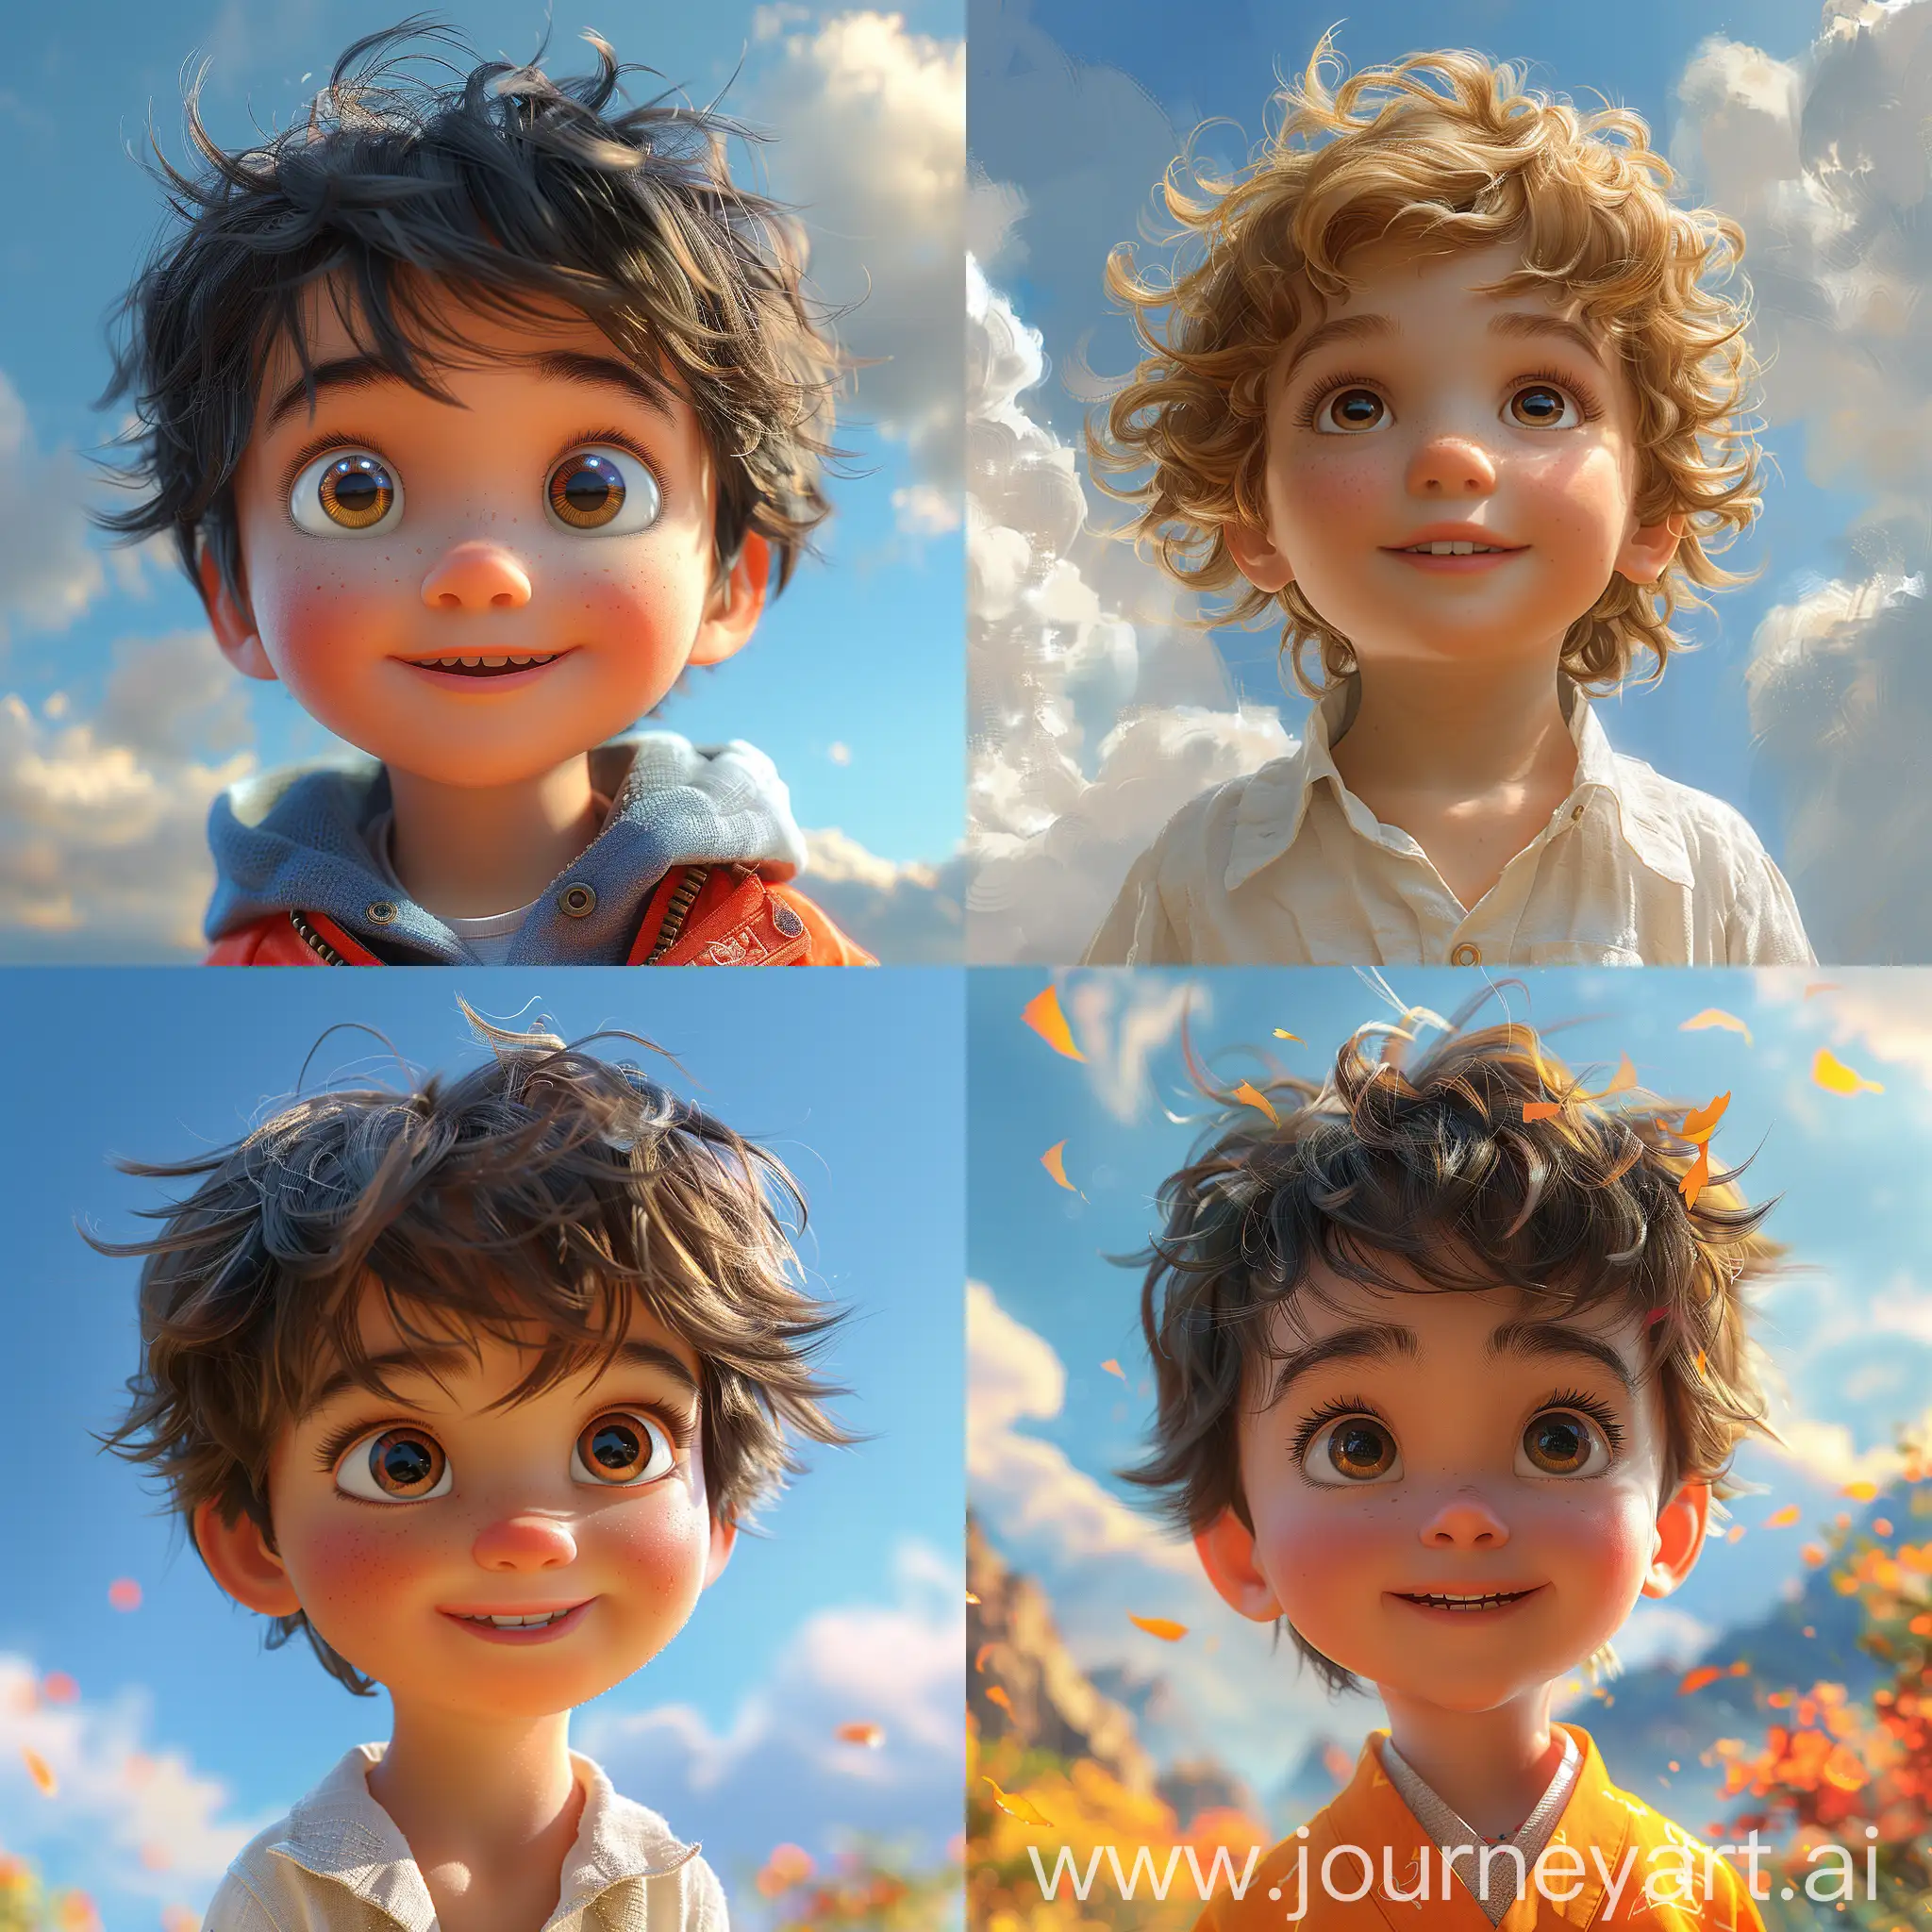 Disney-Prince-Portrait-with-Vibrant-Sky-Background